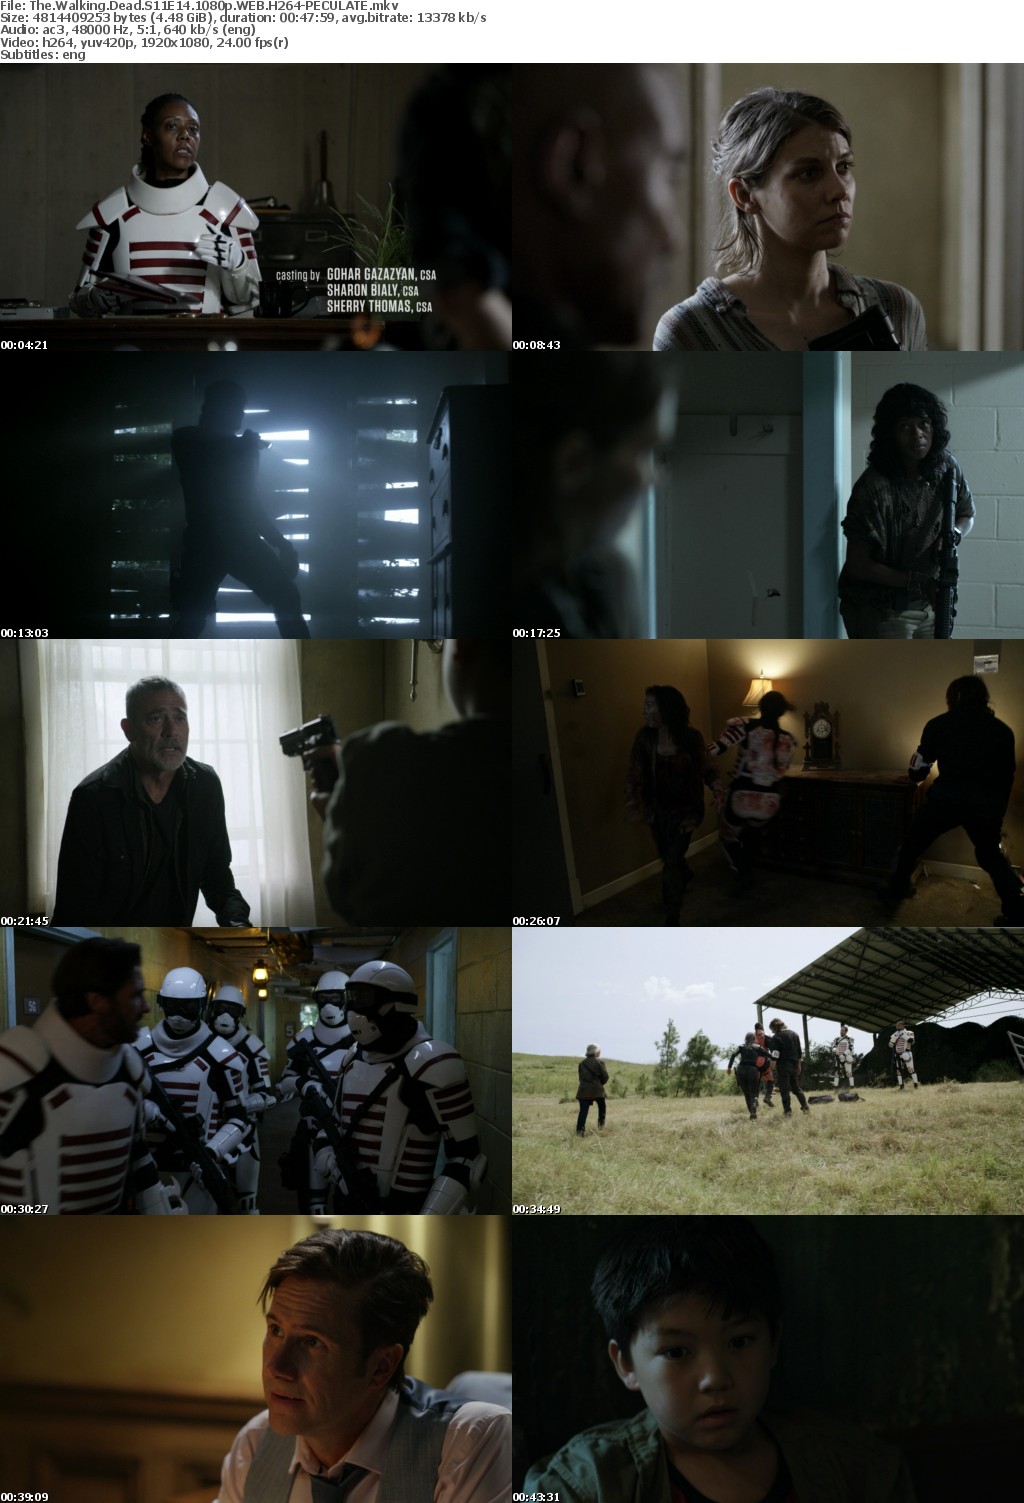 The Walking Dead S11E14 1080p WEB H264-PECULATE